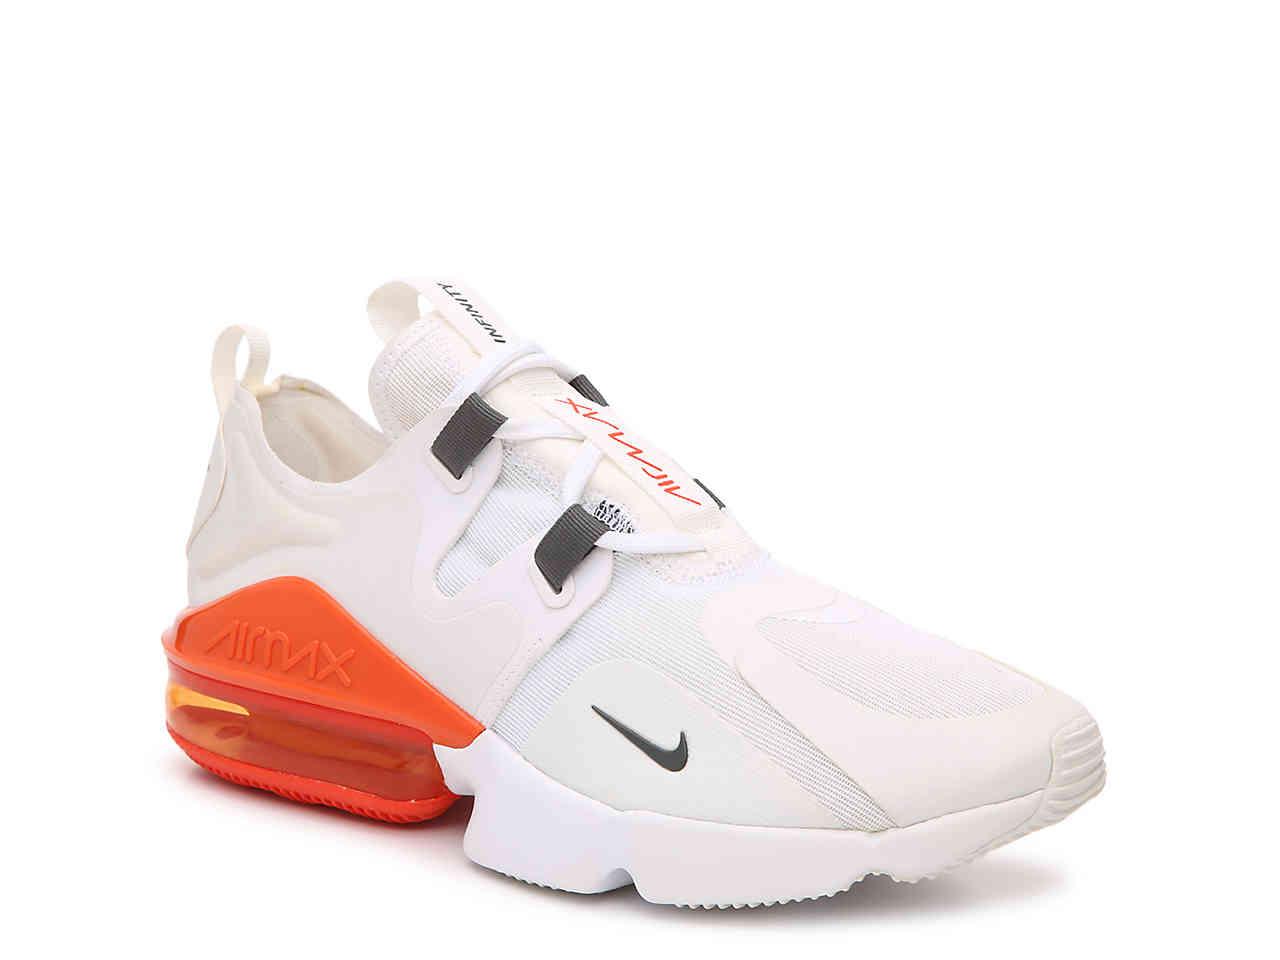 Air Max Infinity Shoe in White/Orange 